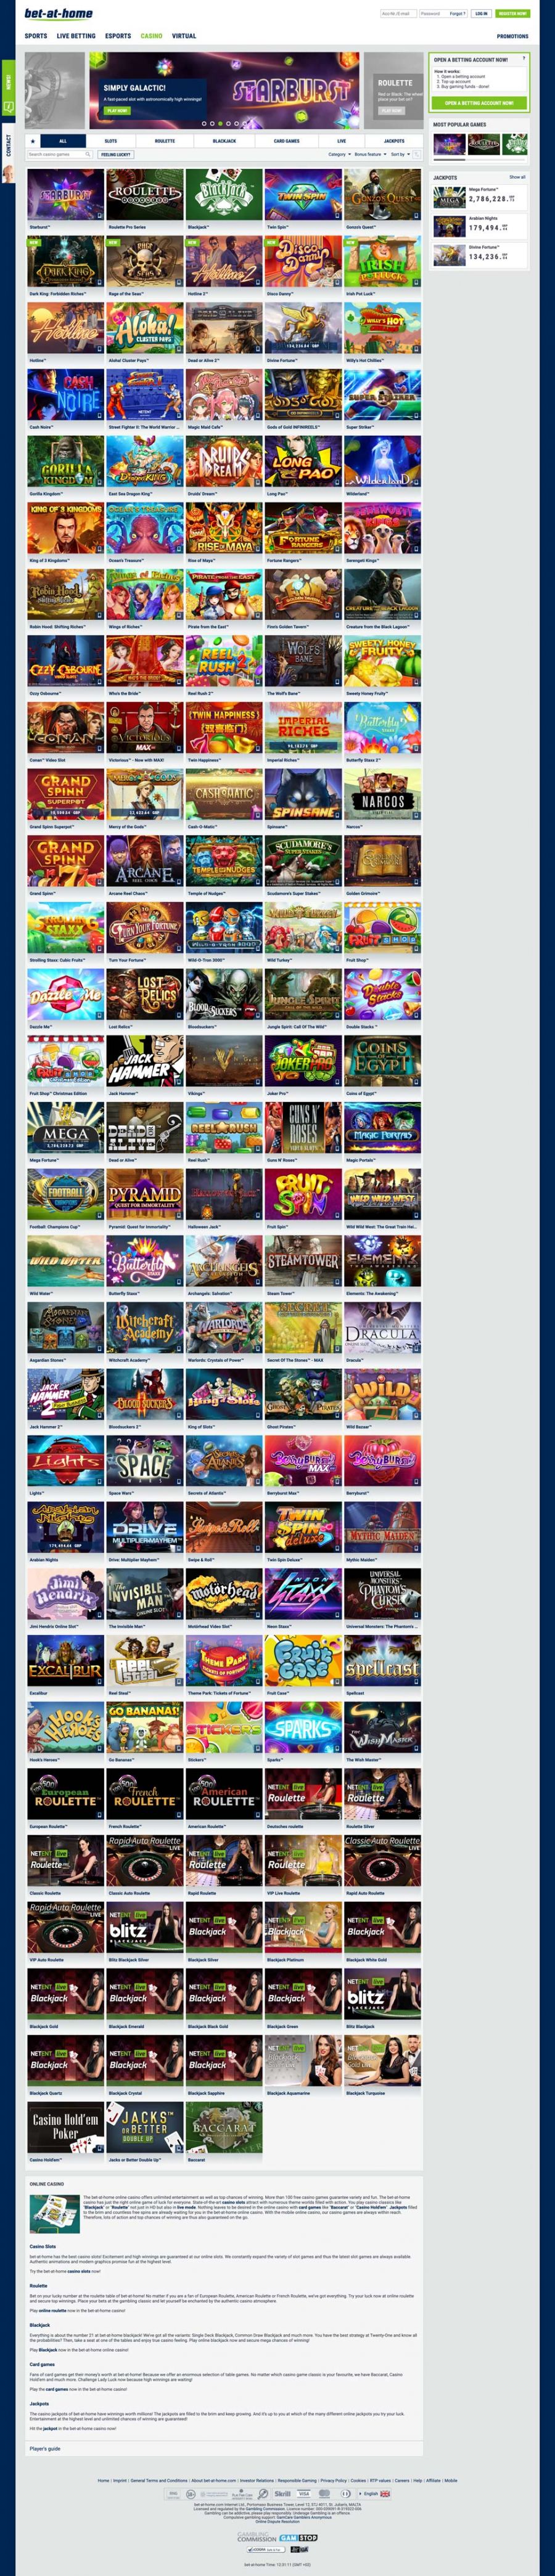 Bet-at-home Casino screenshot